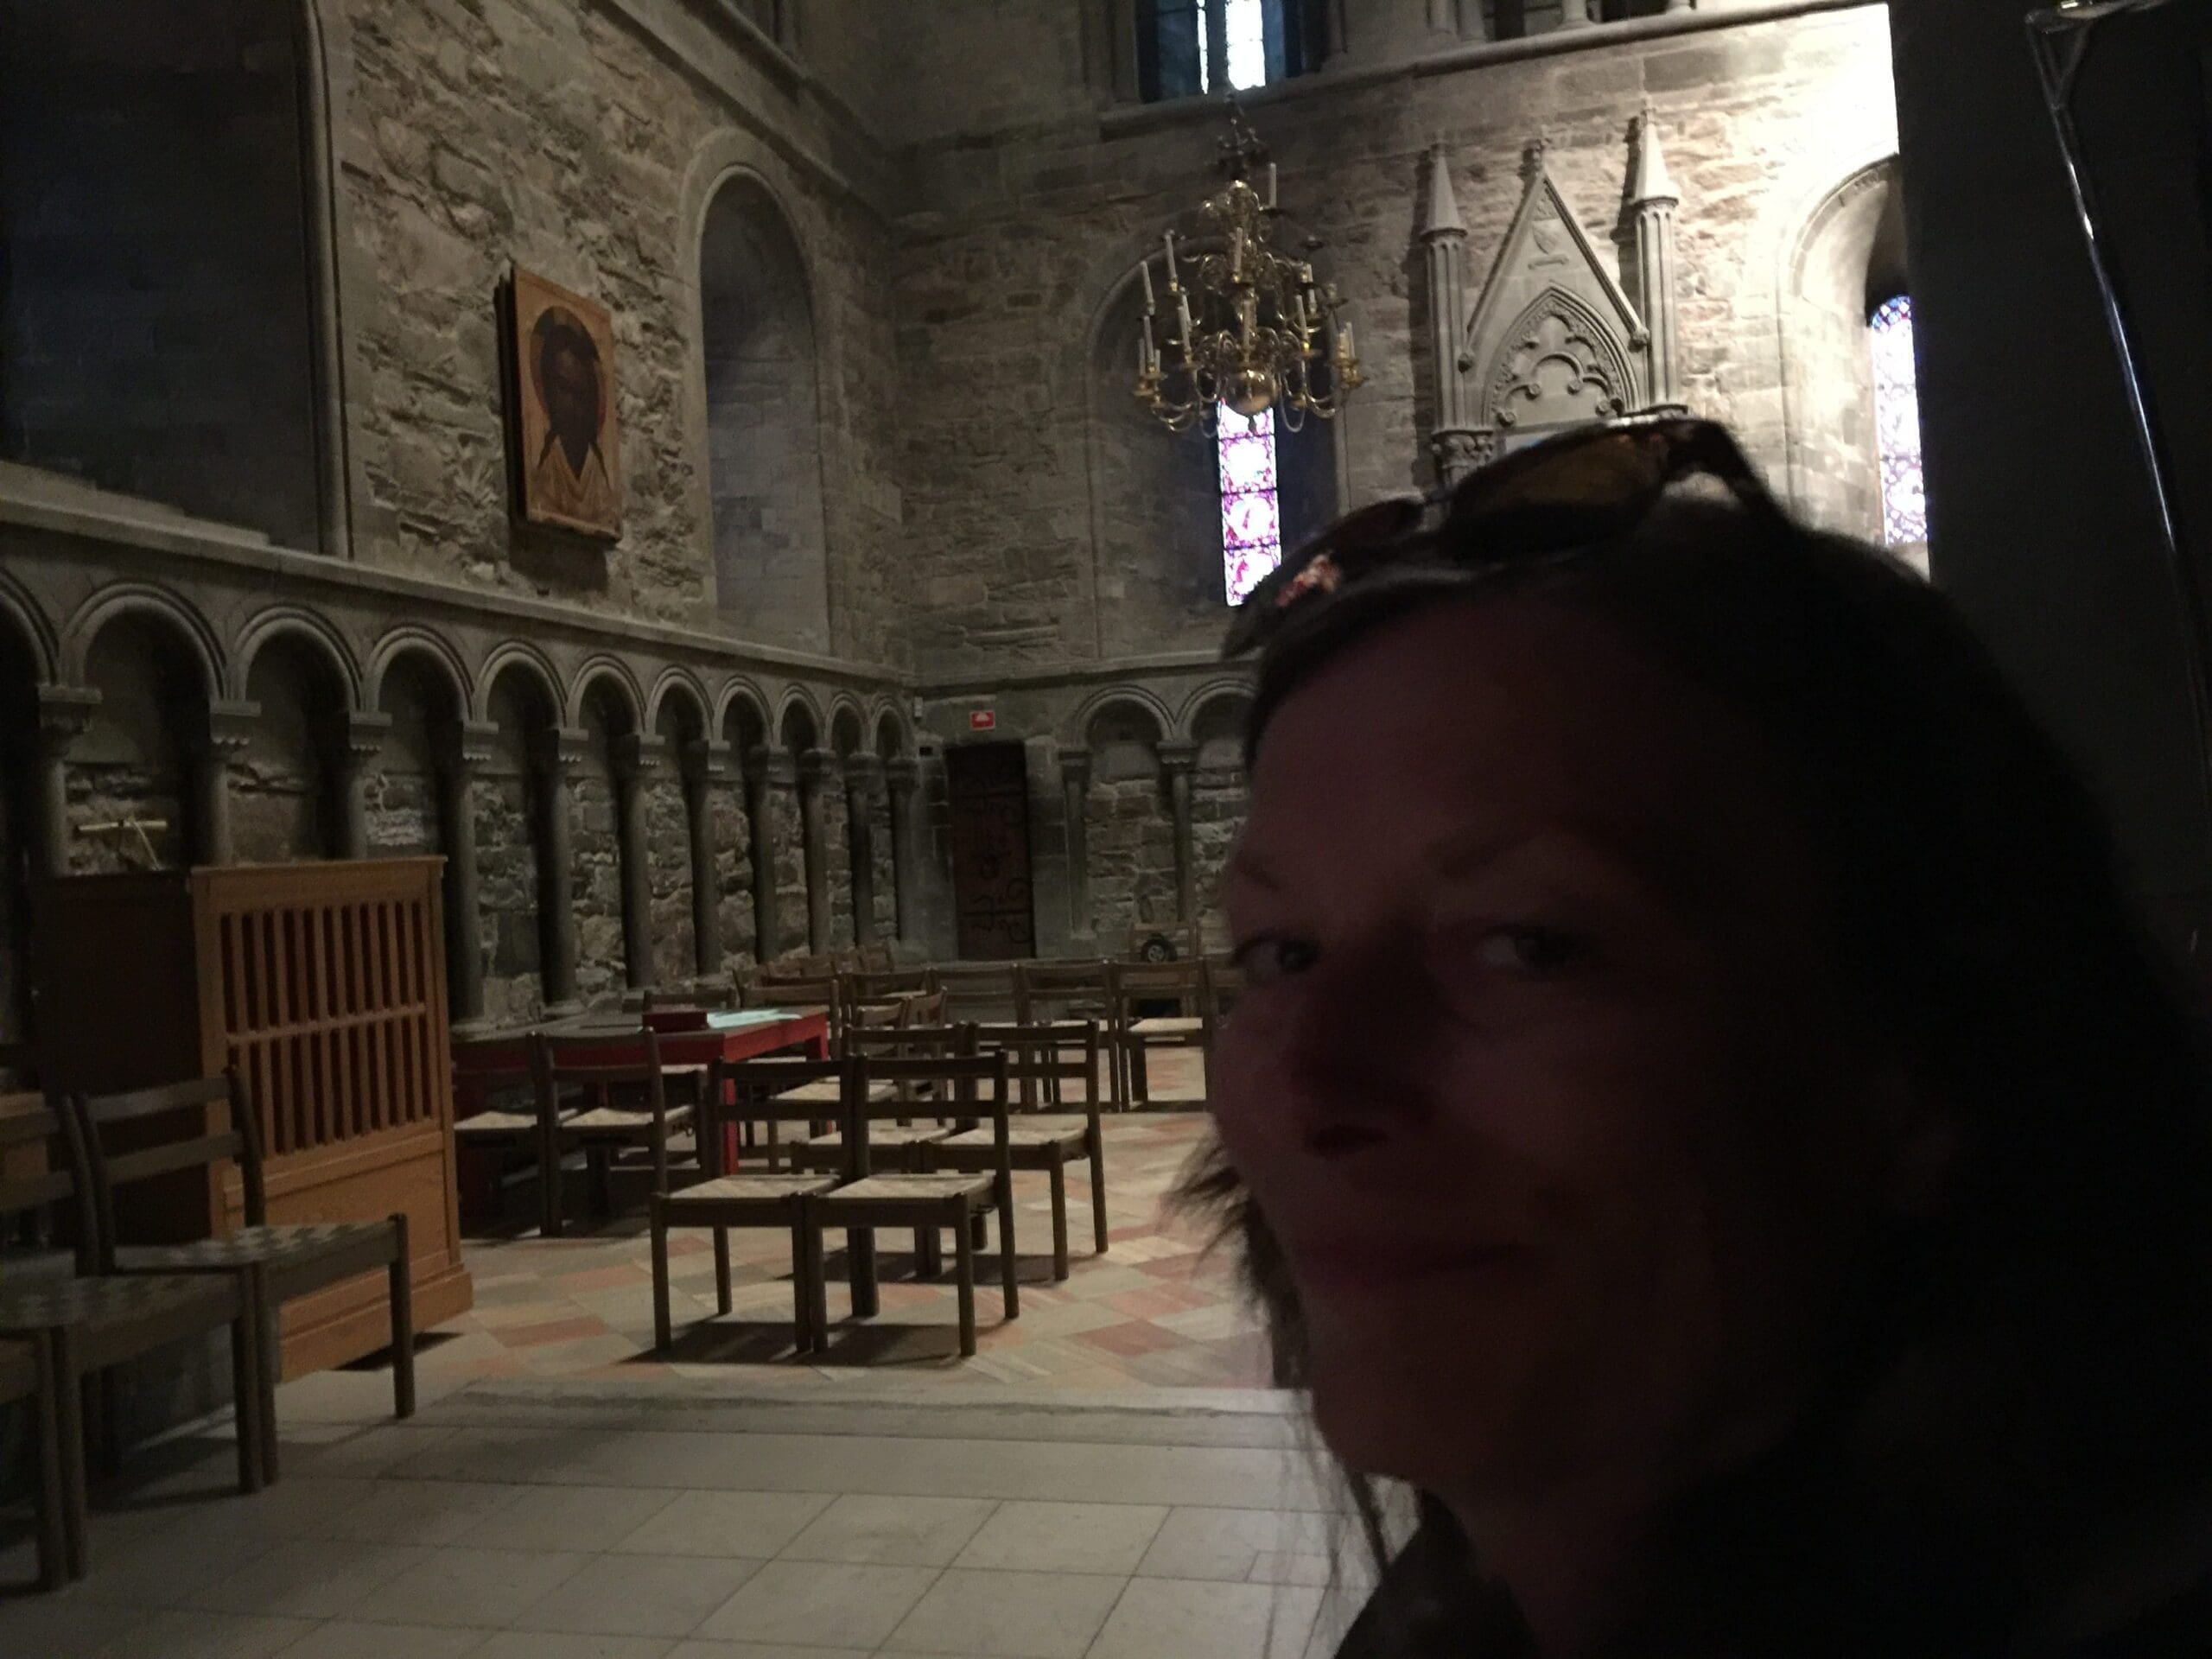 Gail in the Nidaros Cathedral - 3 Days in Trondheim Norway